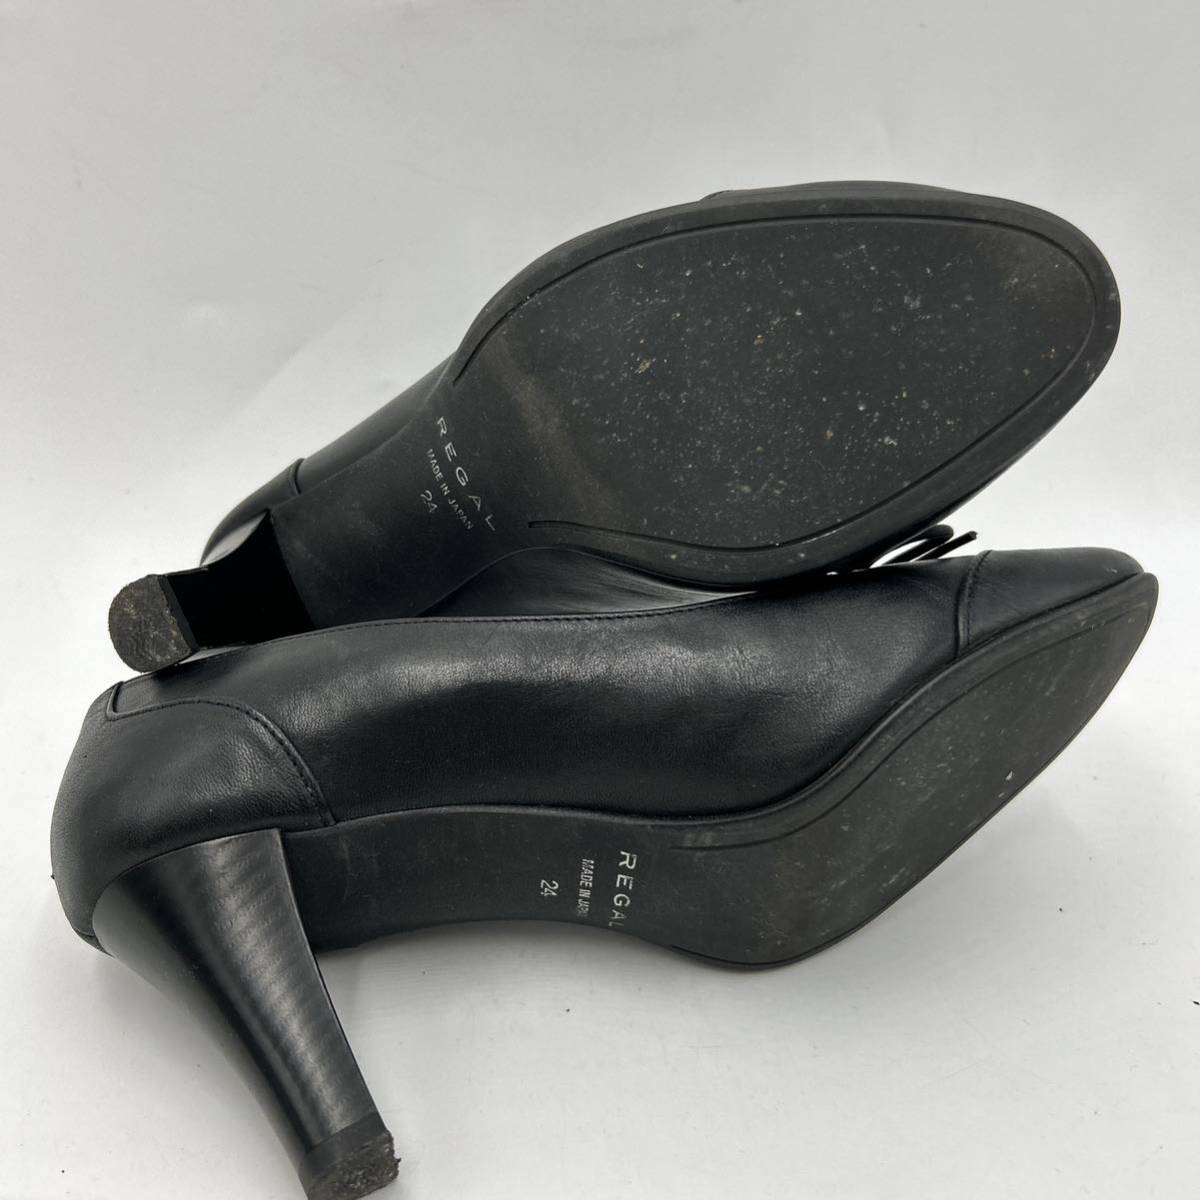 C @ 日本製 '洗礼されたデザイン'『REGAL リーガル』本革 LETHER ヒール パンプス 革靴 24cm 履き心地抜群 レディース 婦人靴 シューズ 黒_画像6